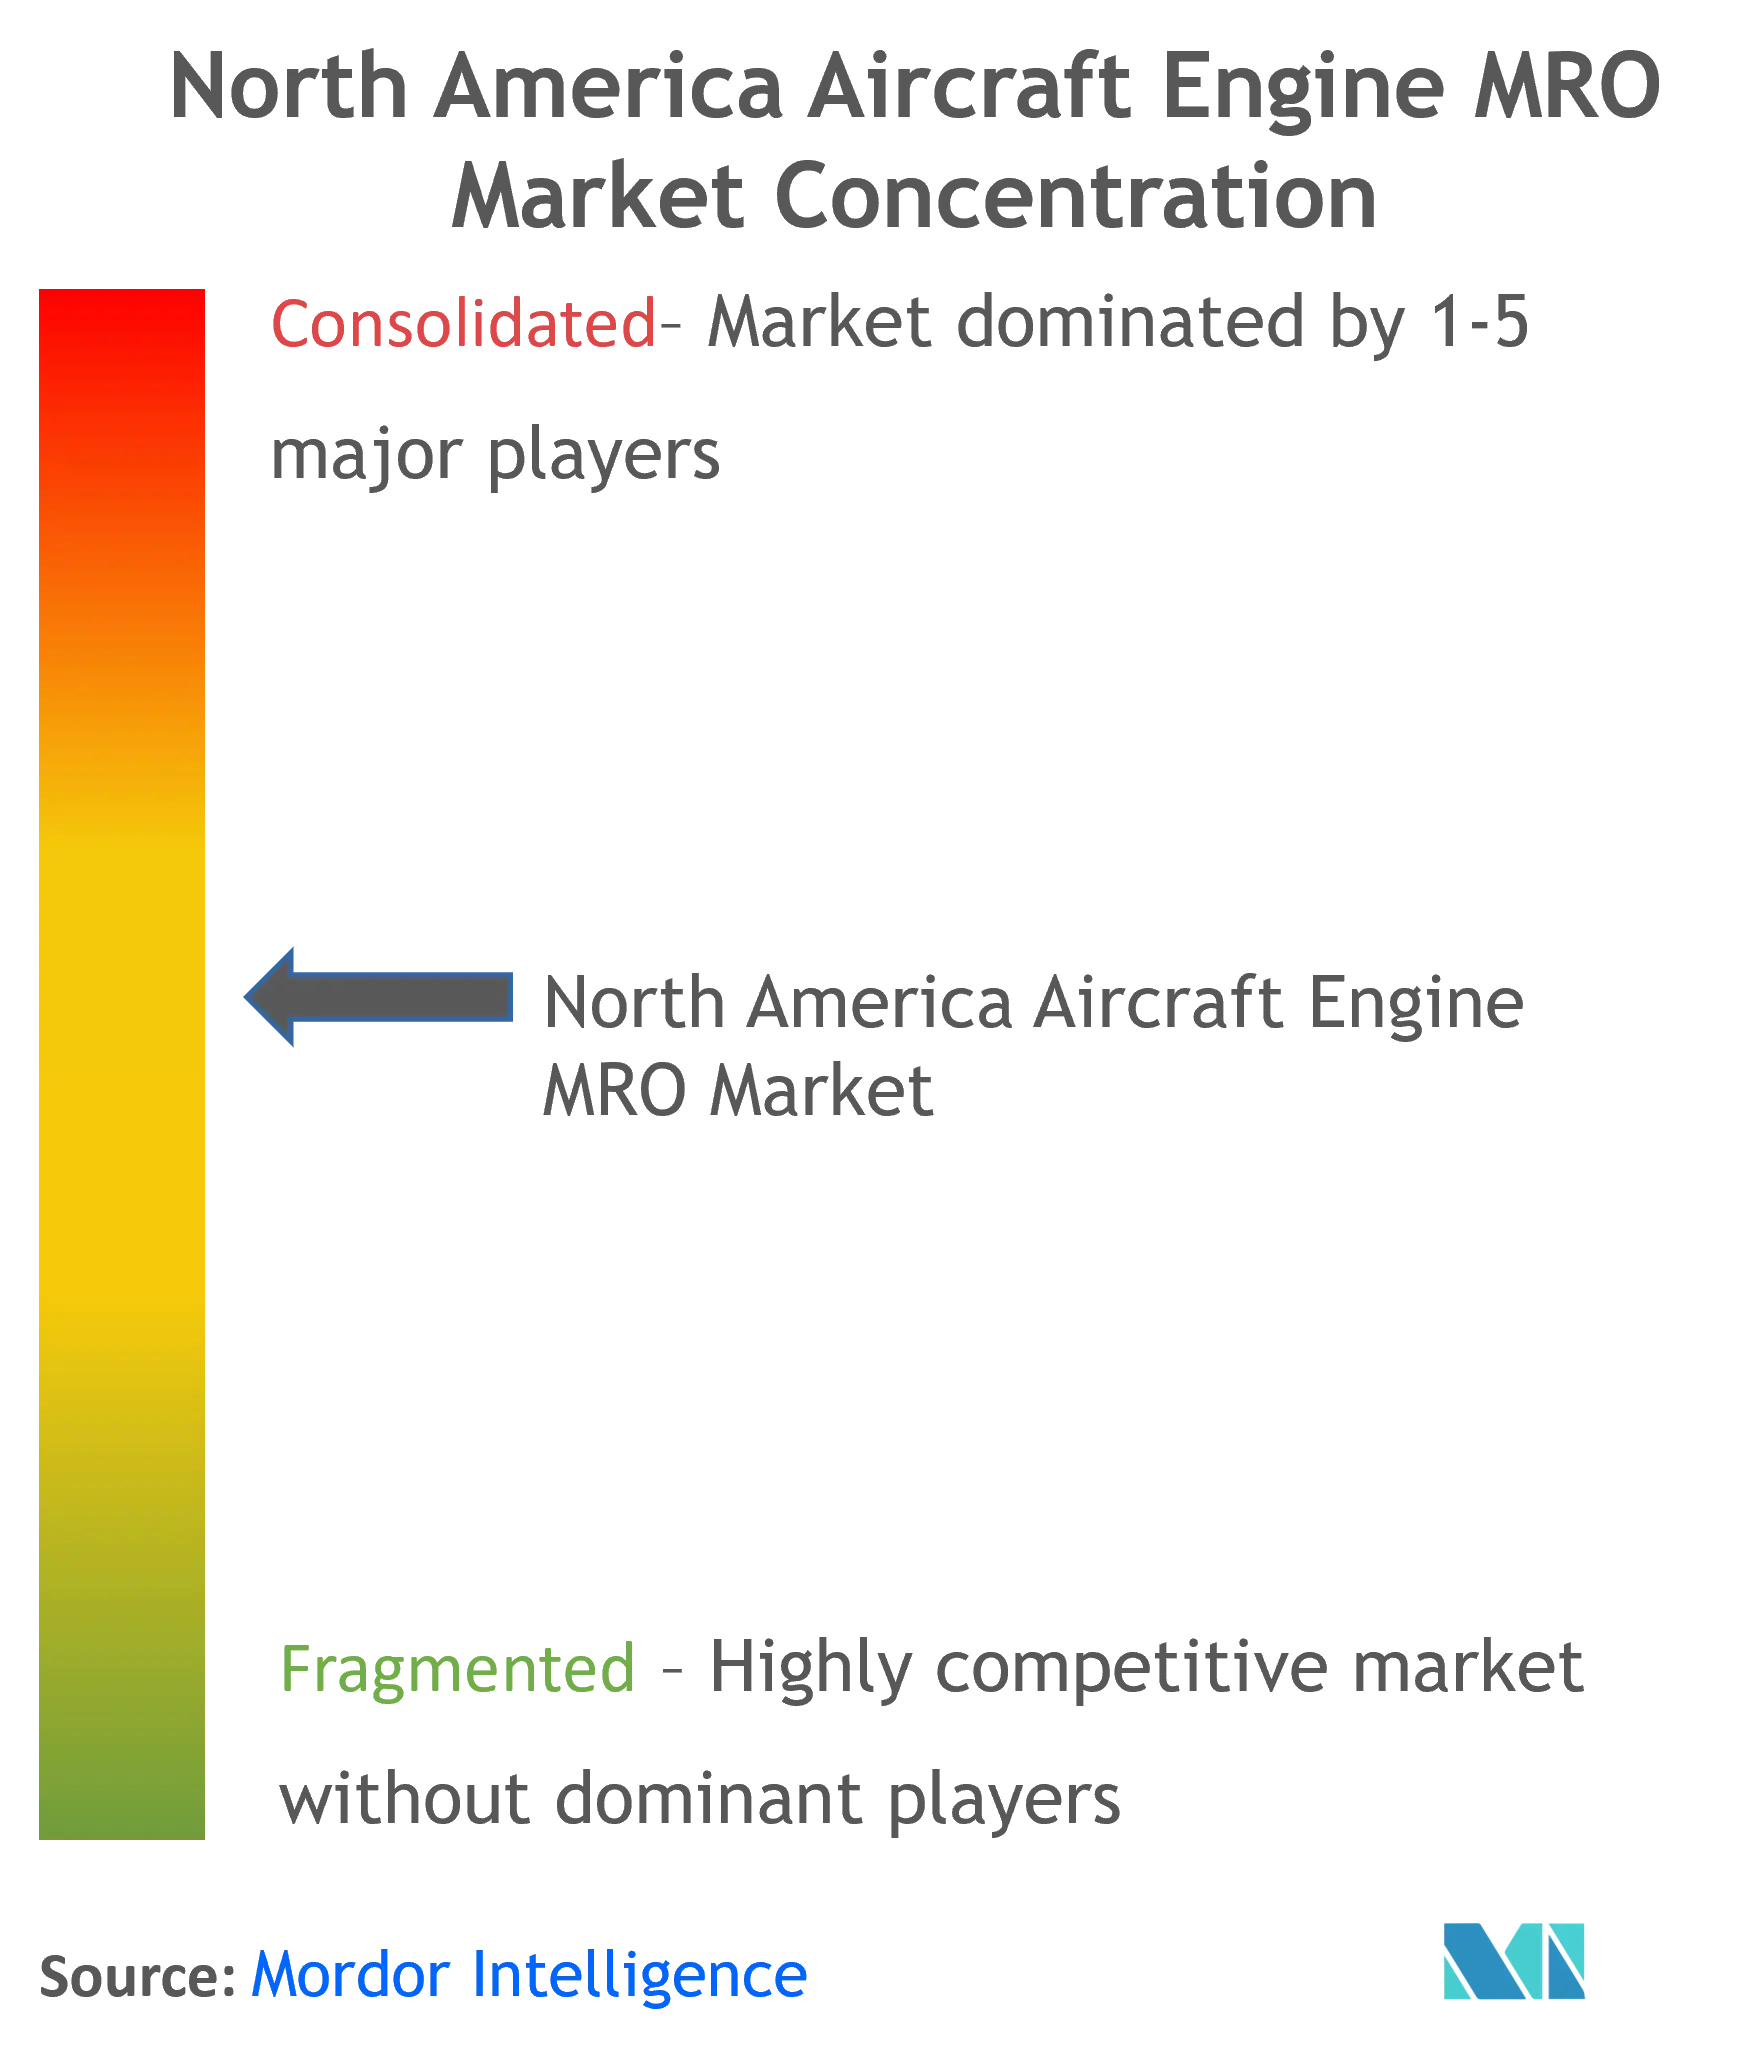 Nordamerika Flugzeugmotoren-MROMarktkonzentration